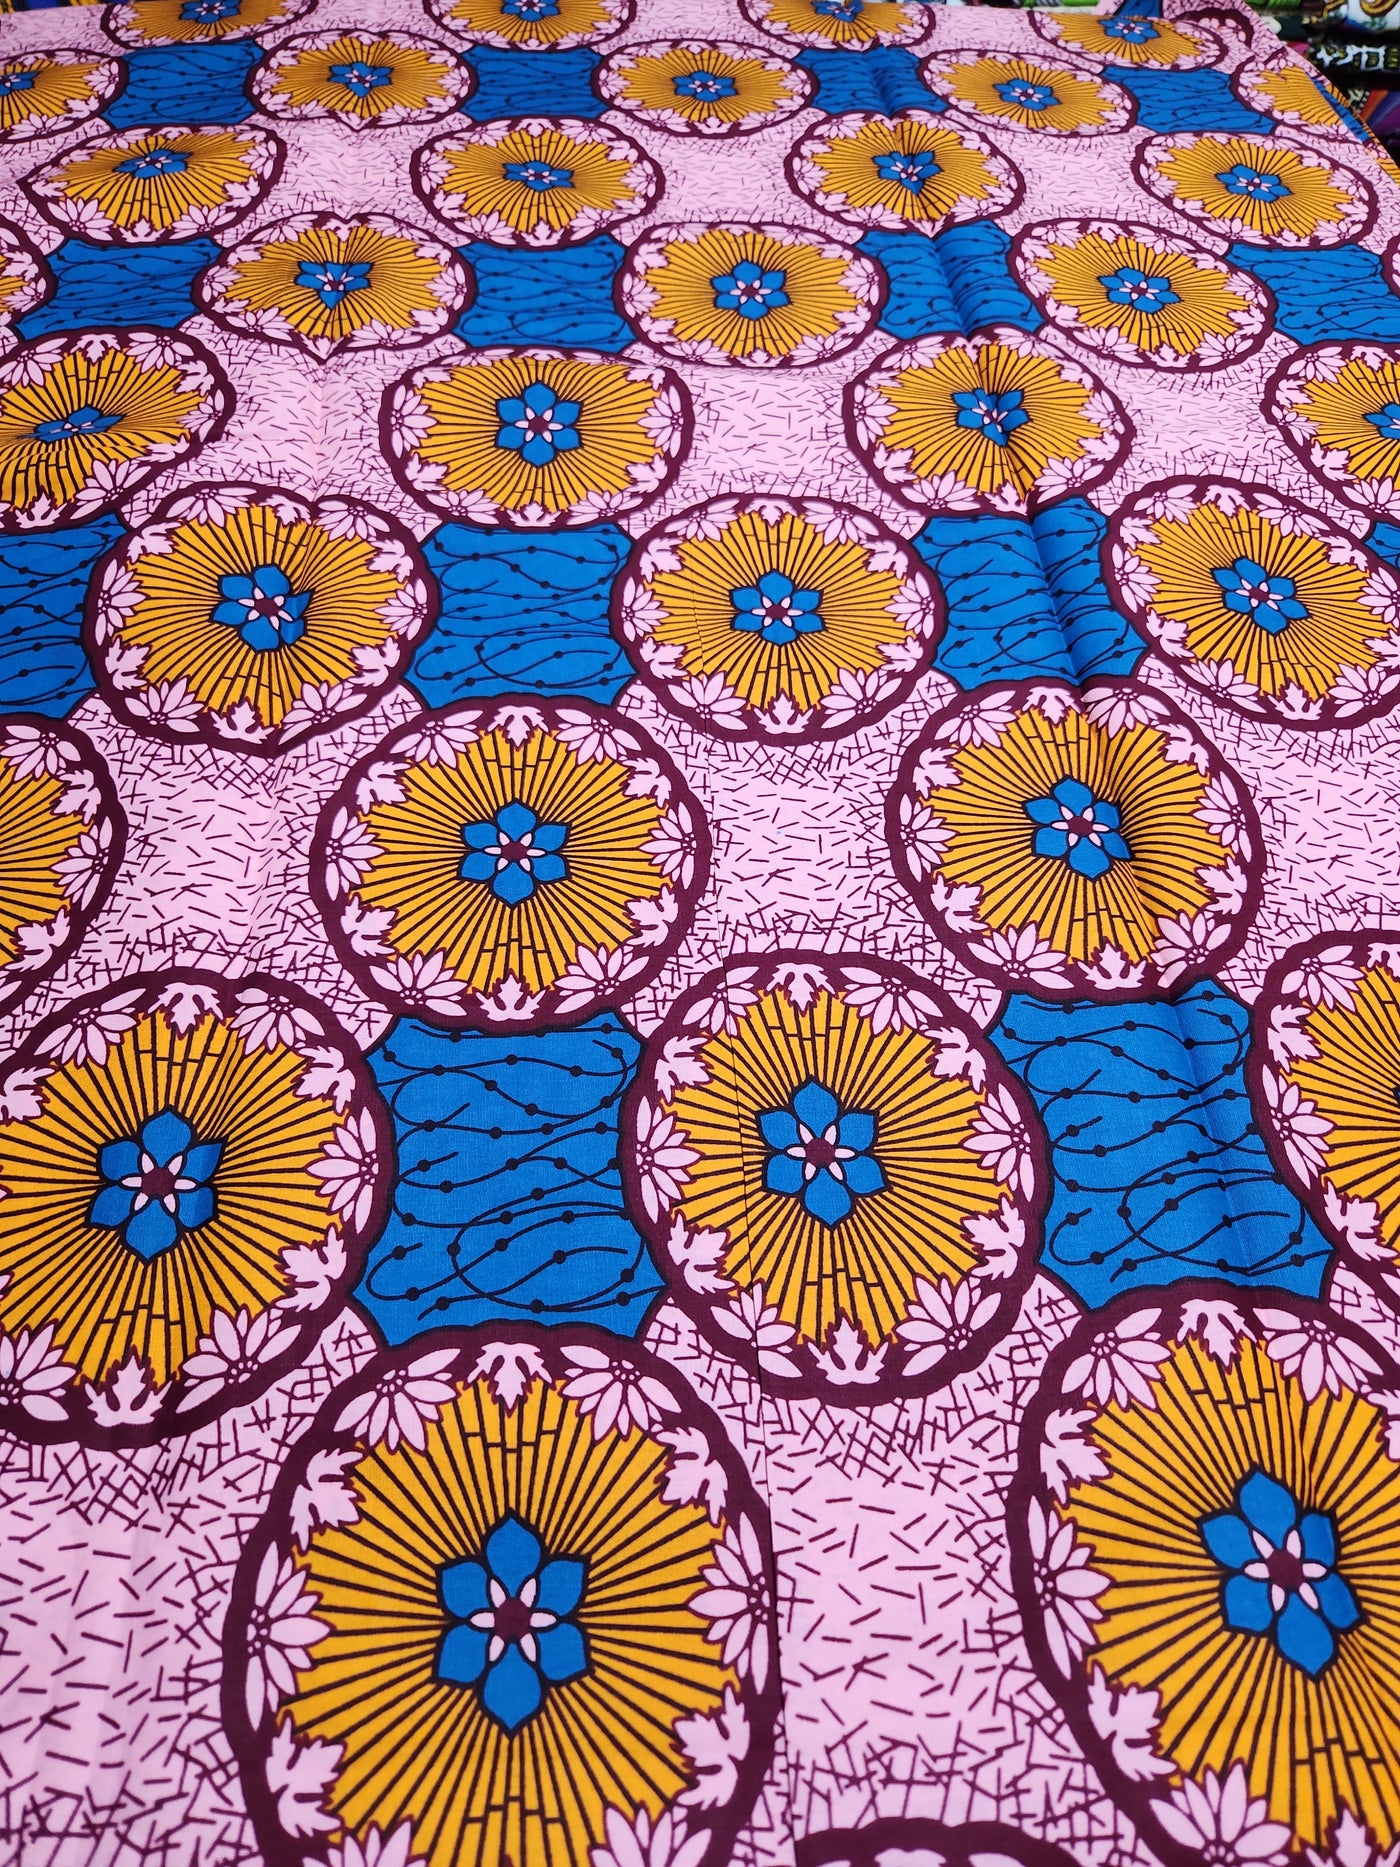 Pink African Print Fabric ACS2209